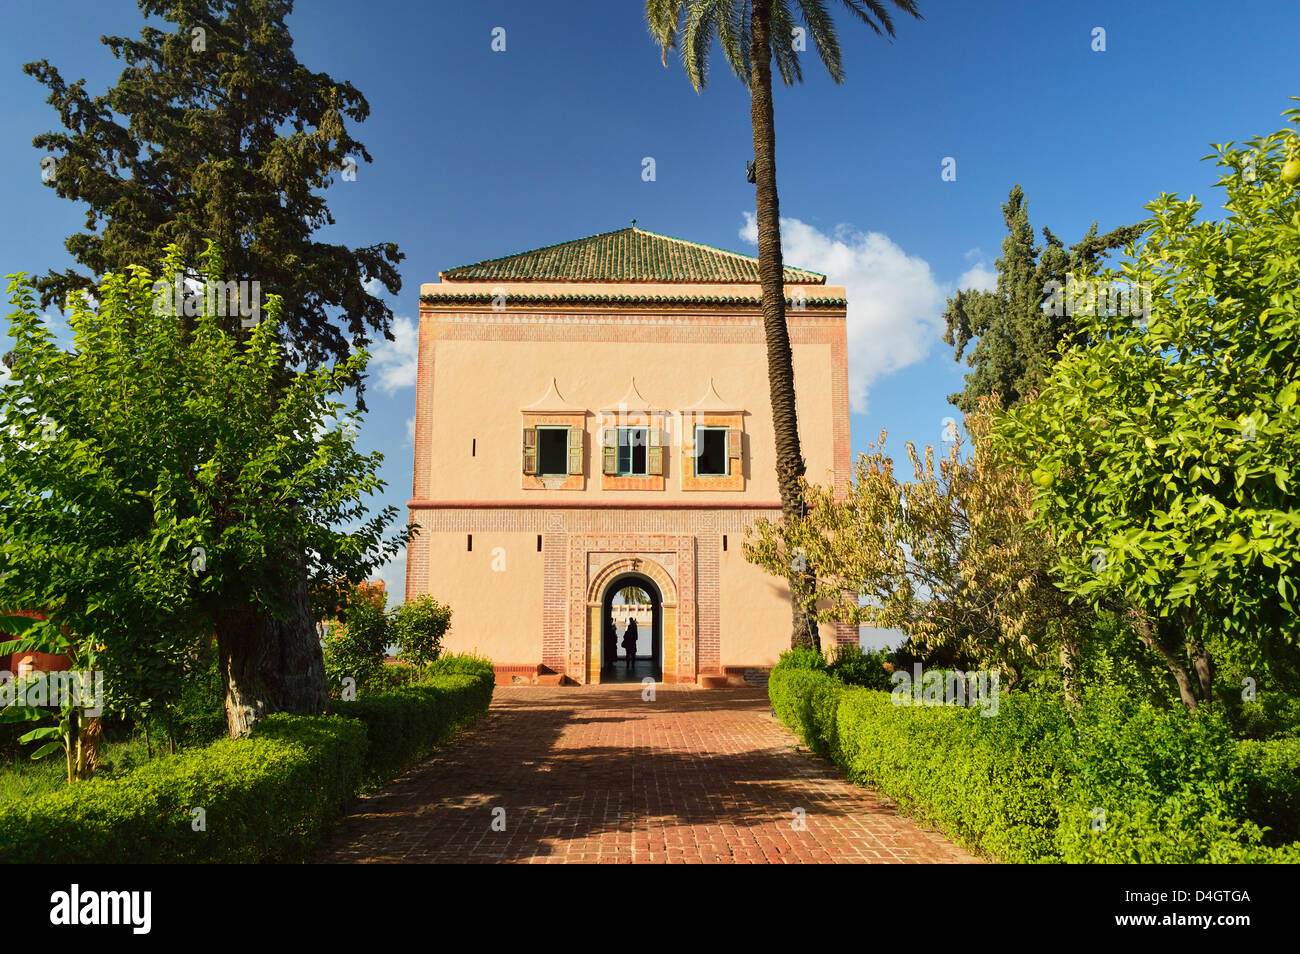 Pavillon de jardin saadienne, La Menara (Menara Gardens), Marrakech, Maroc, Afrique du Nord Banque D'Images